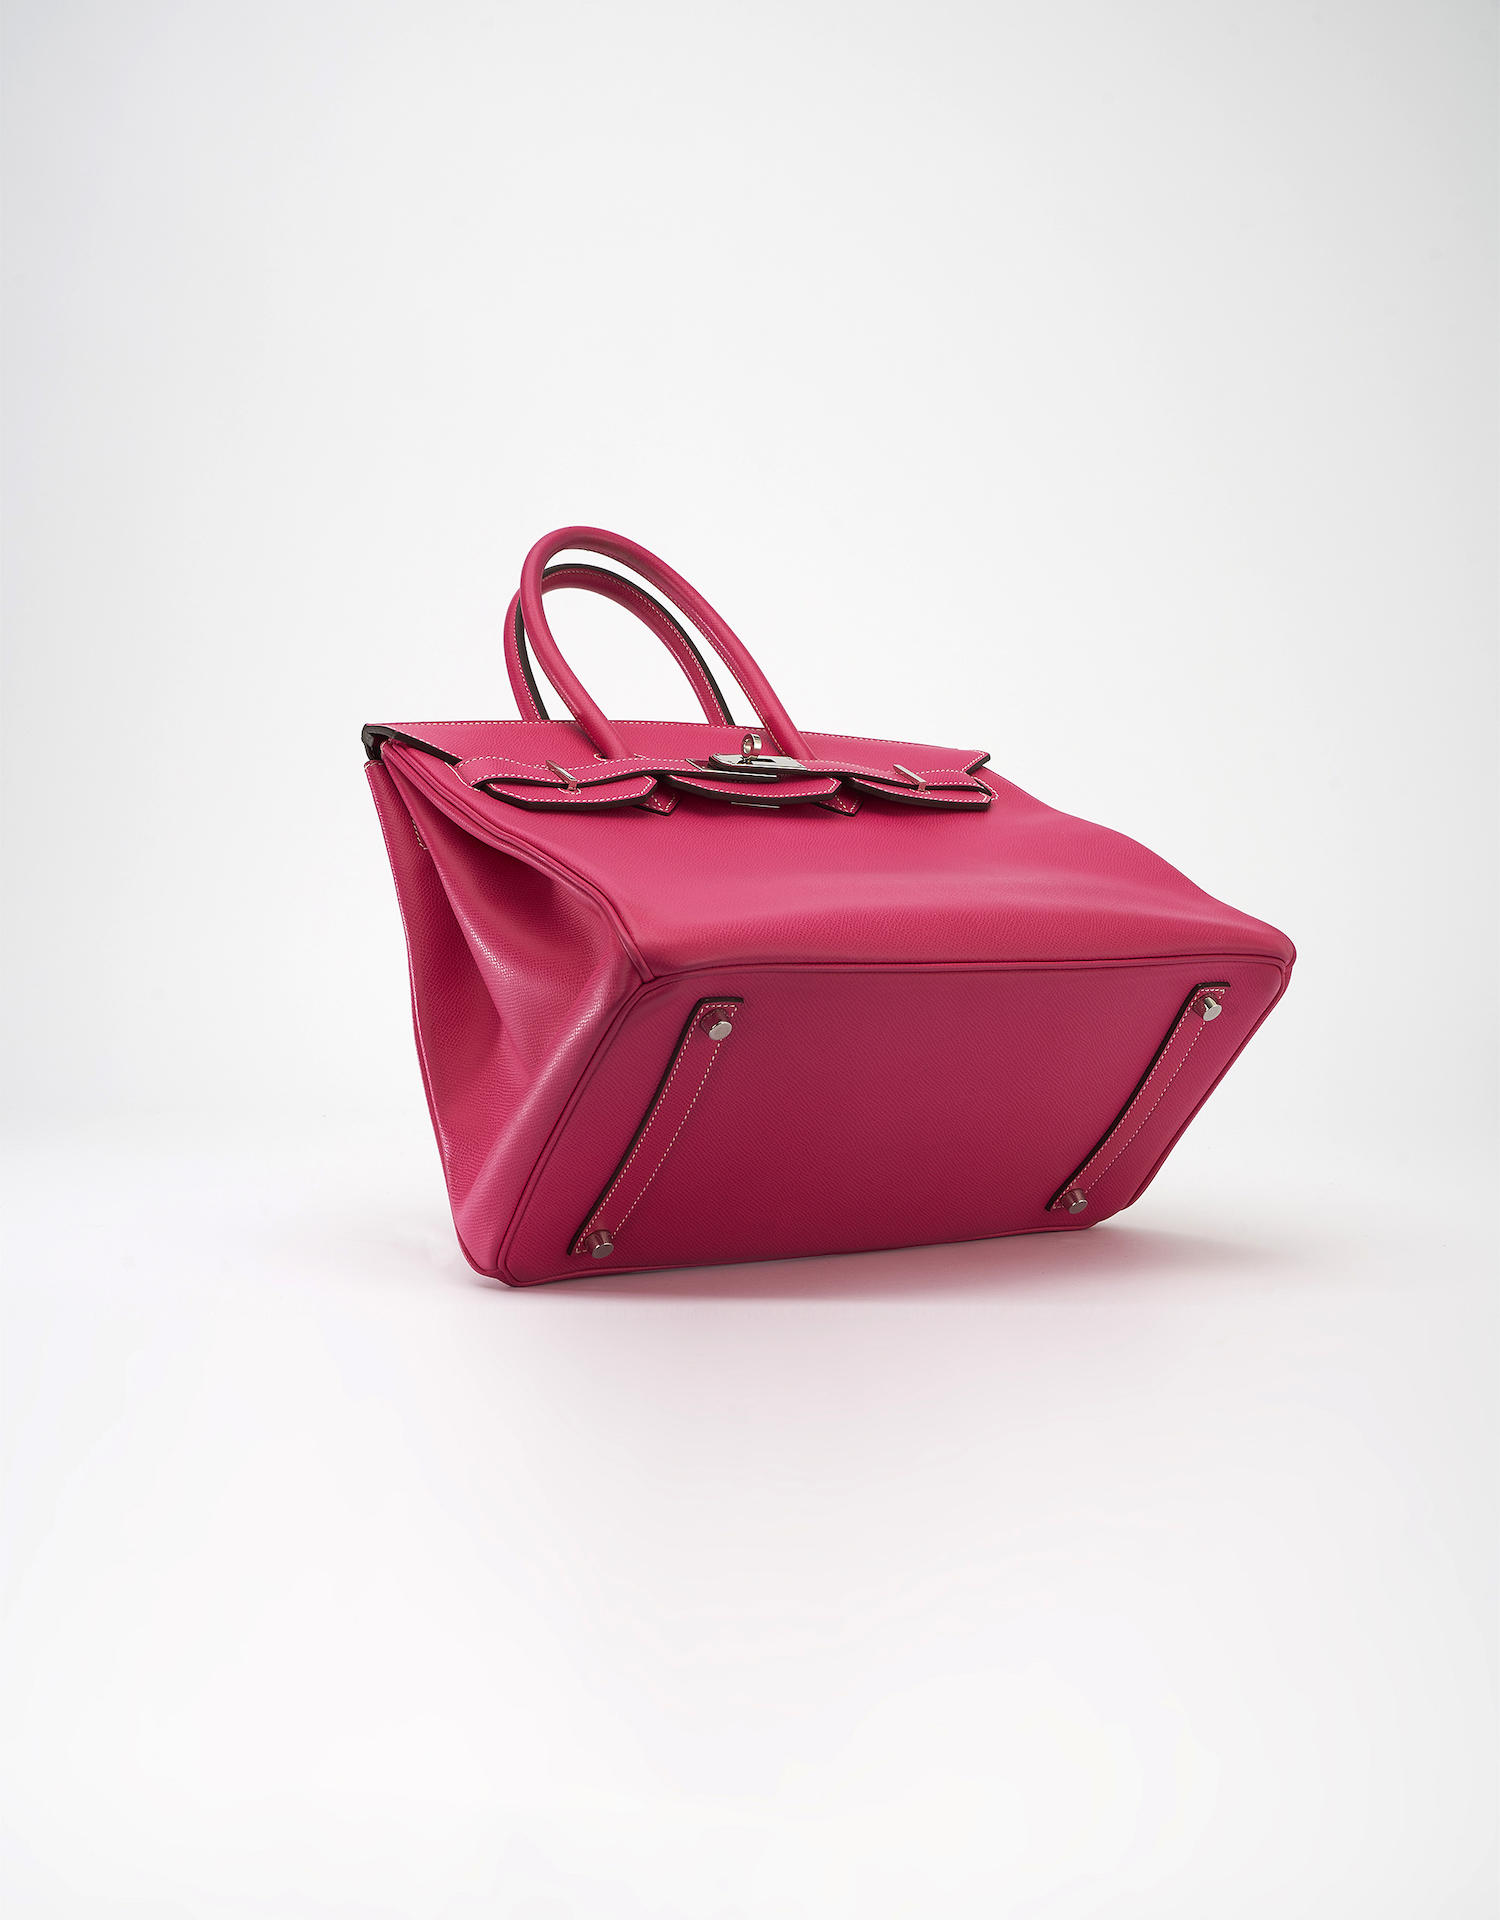 Hermes Epsom Leather 35cm Birkin Bag Red - Luxury In Reach